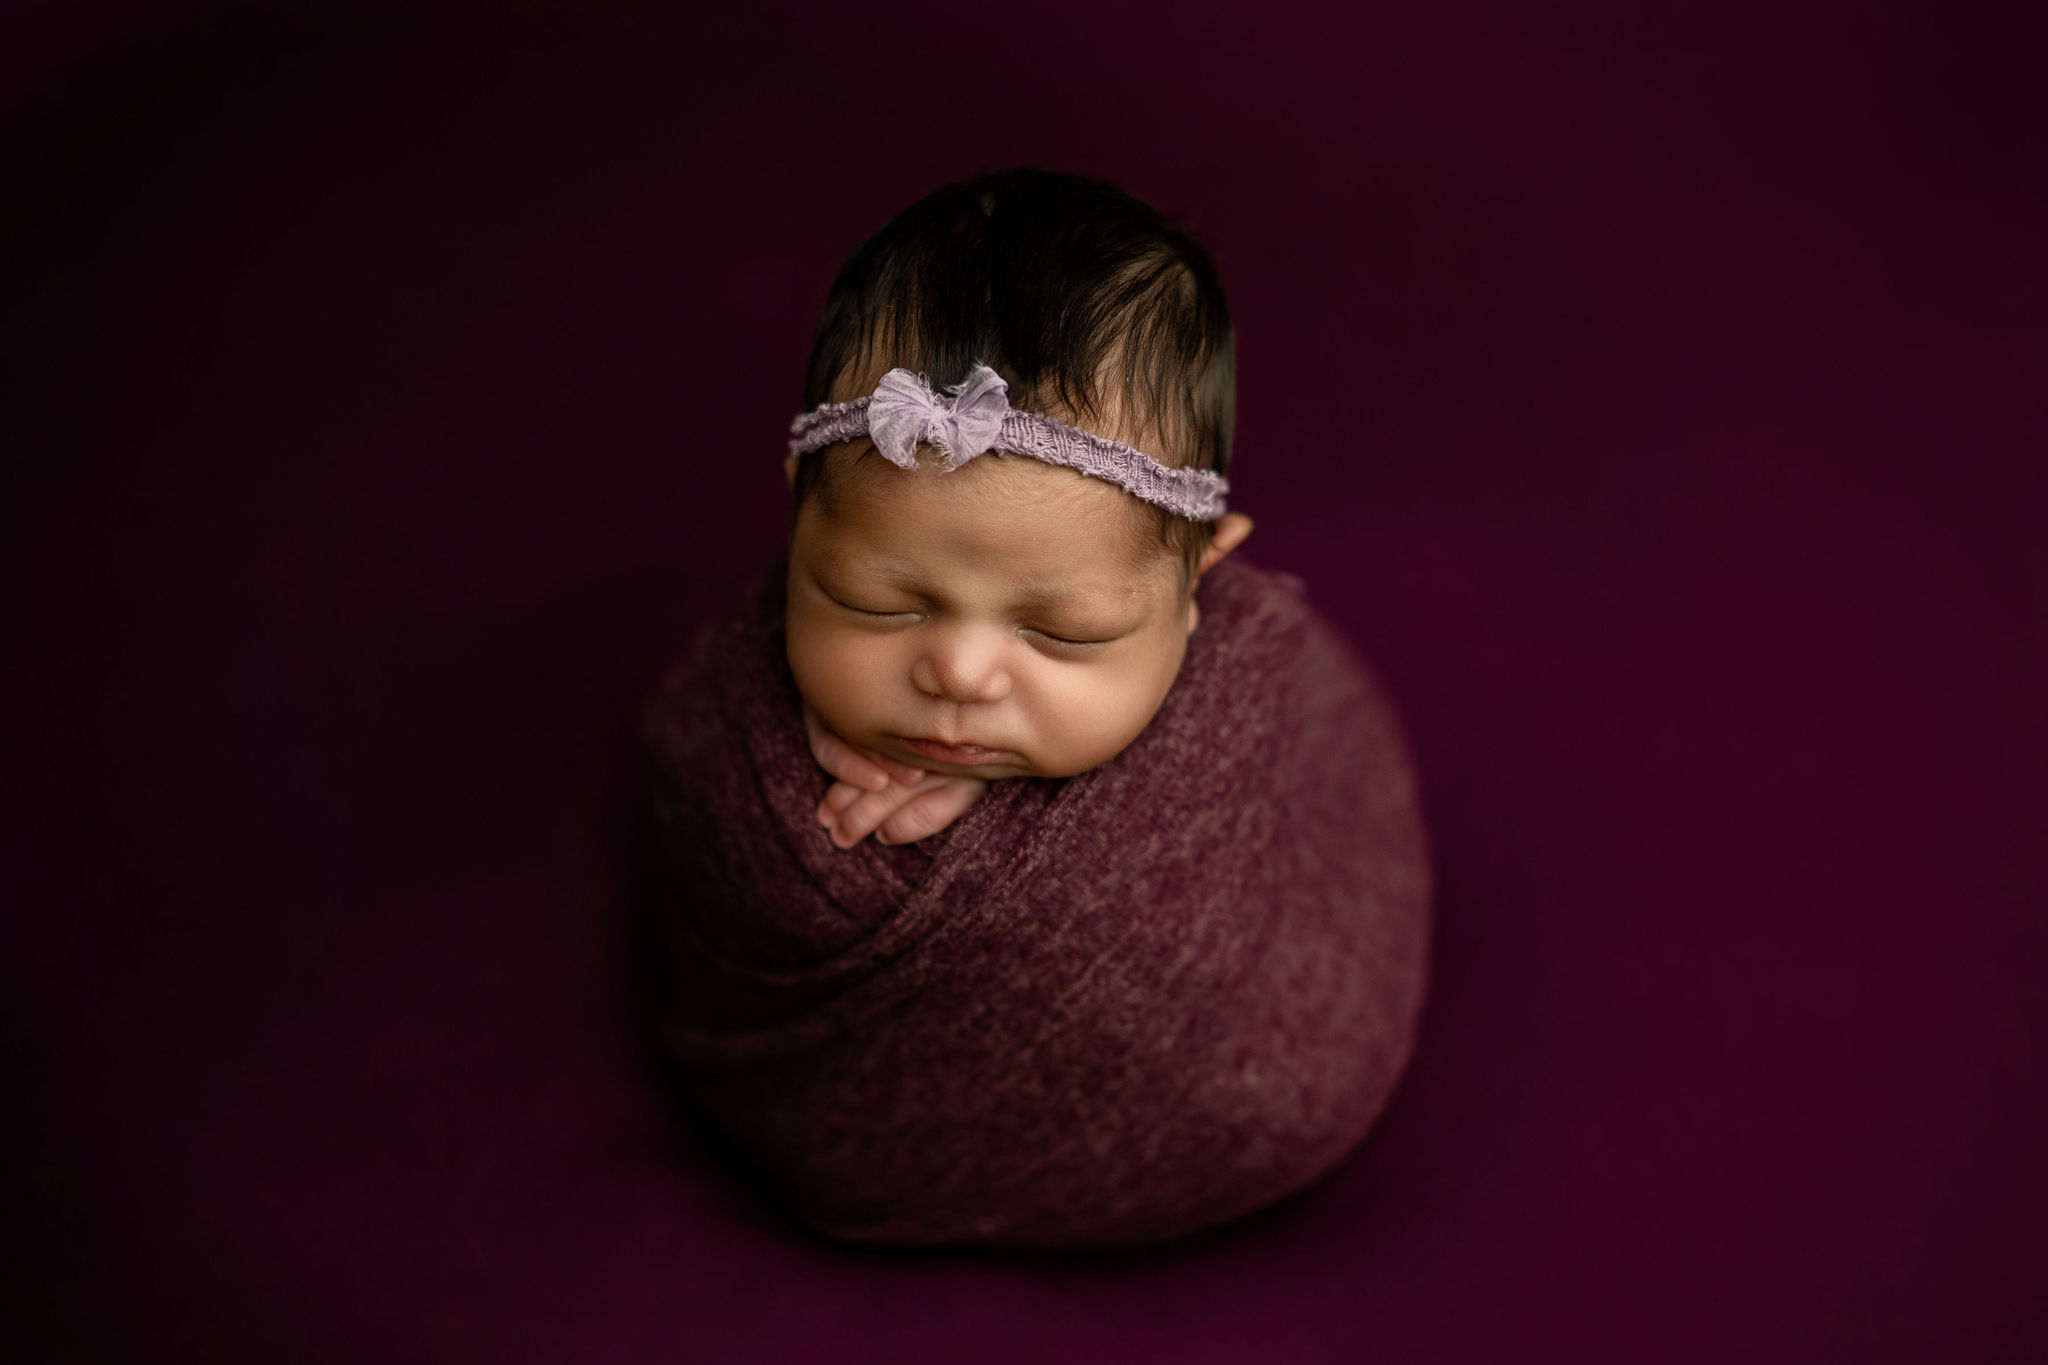 A newborn baby sleeps in a purple swaddle with a light purple headband